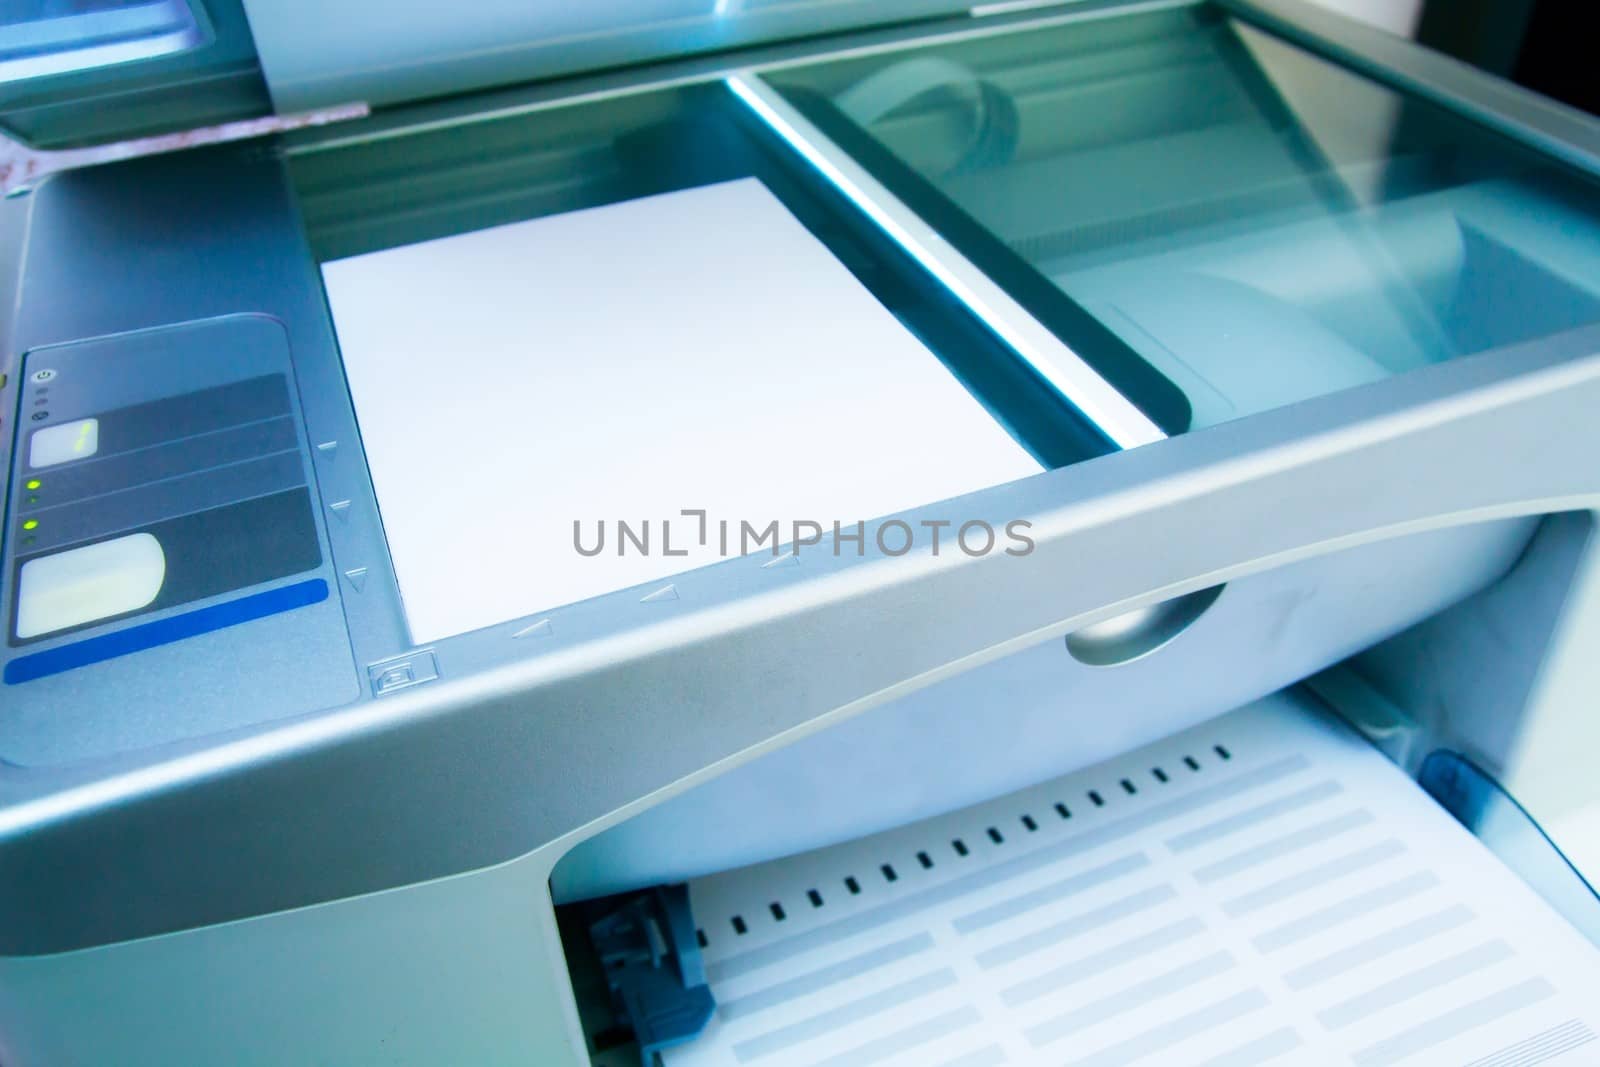 Close-up working printer scanner copier device